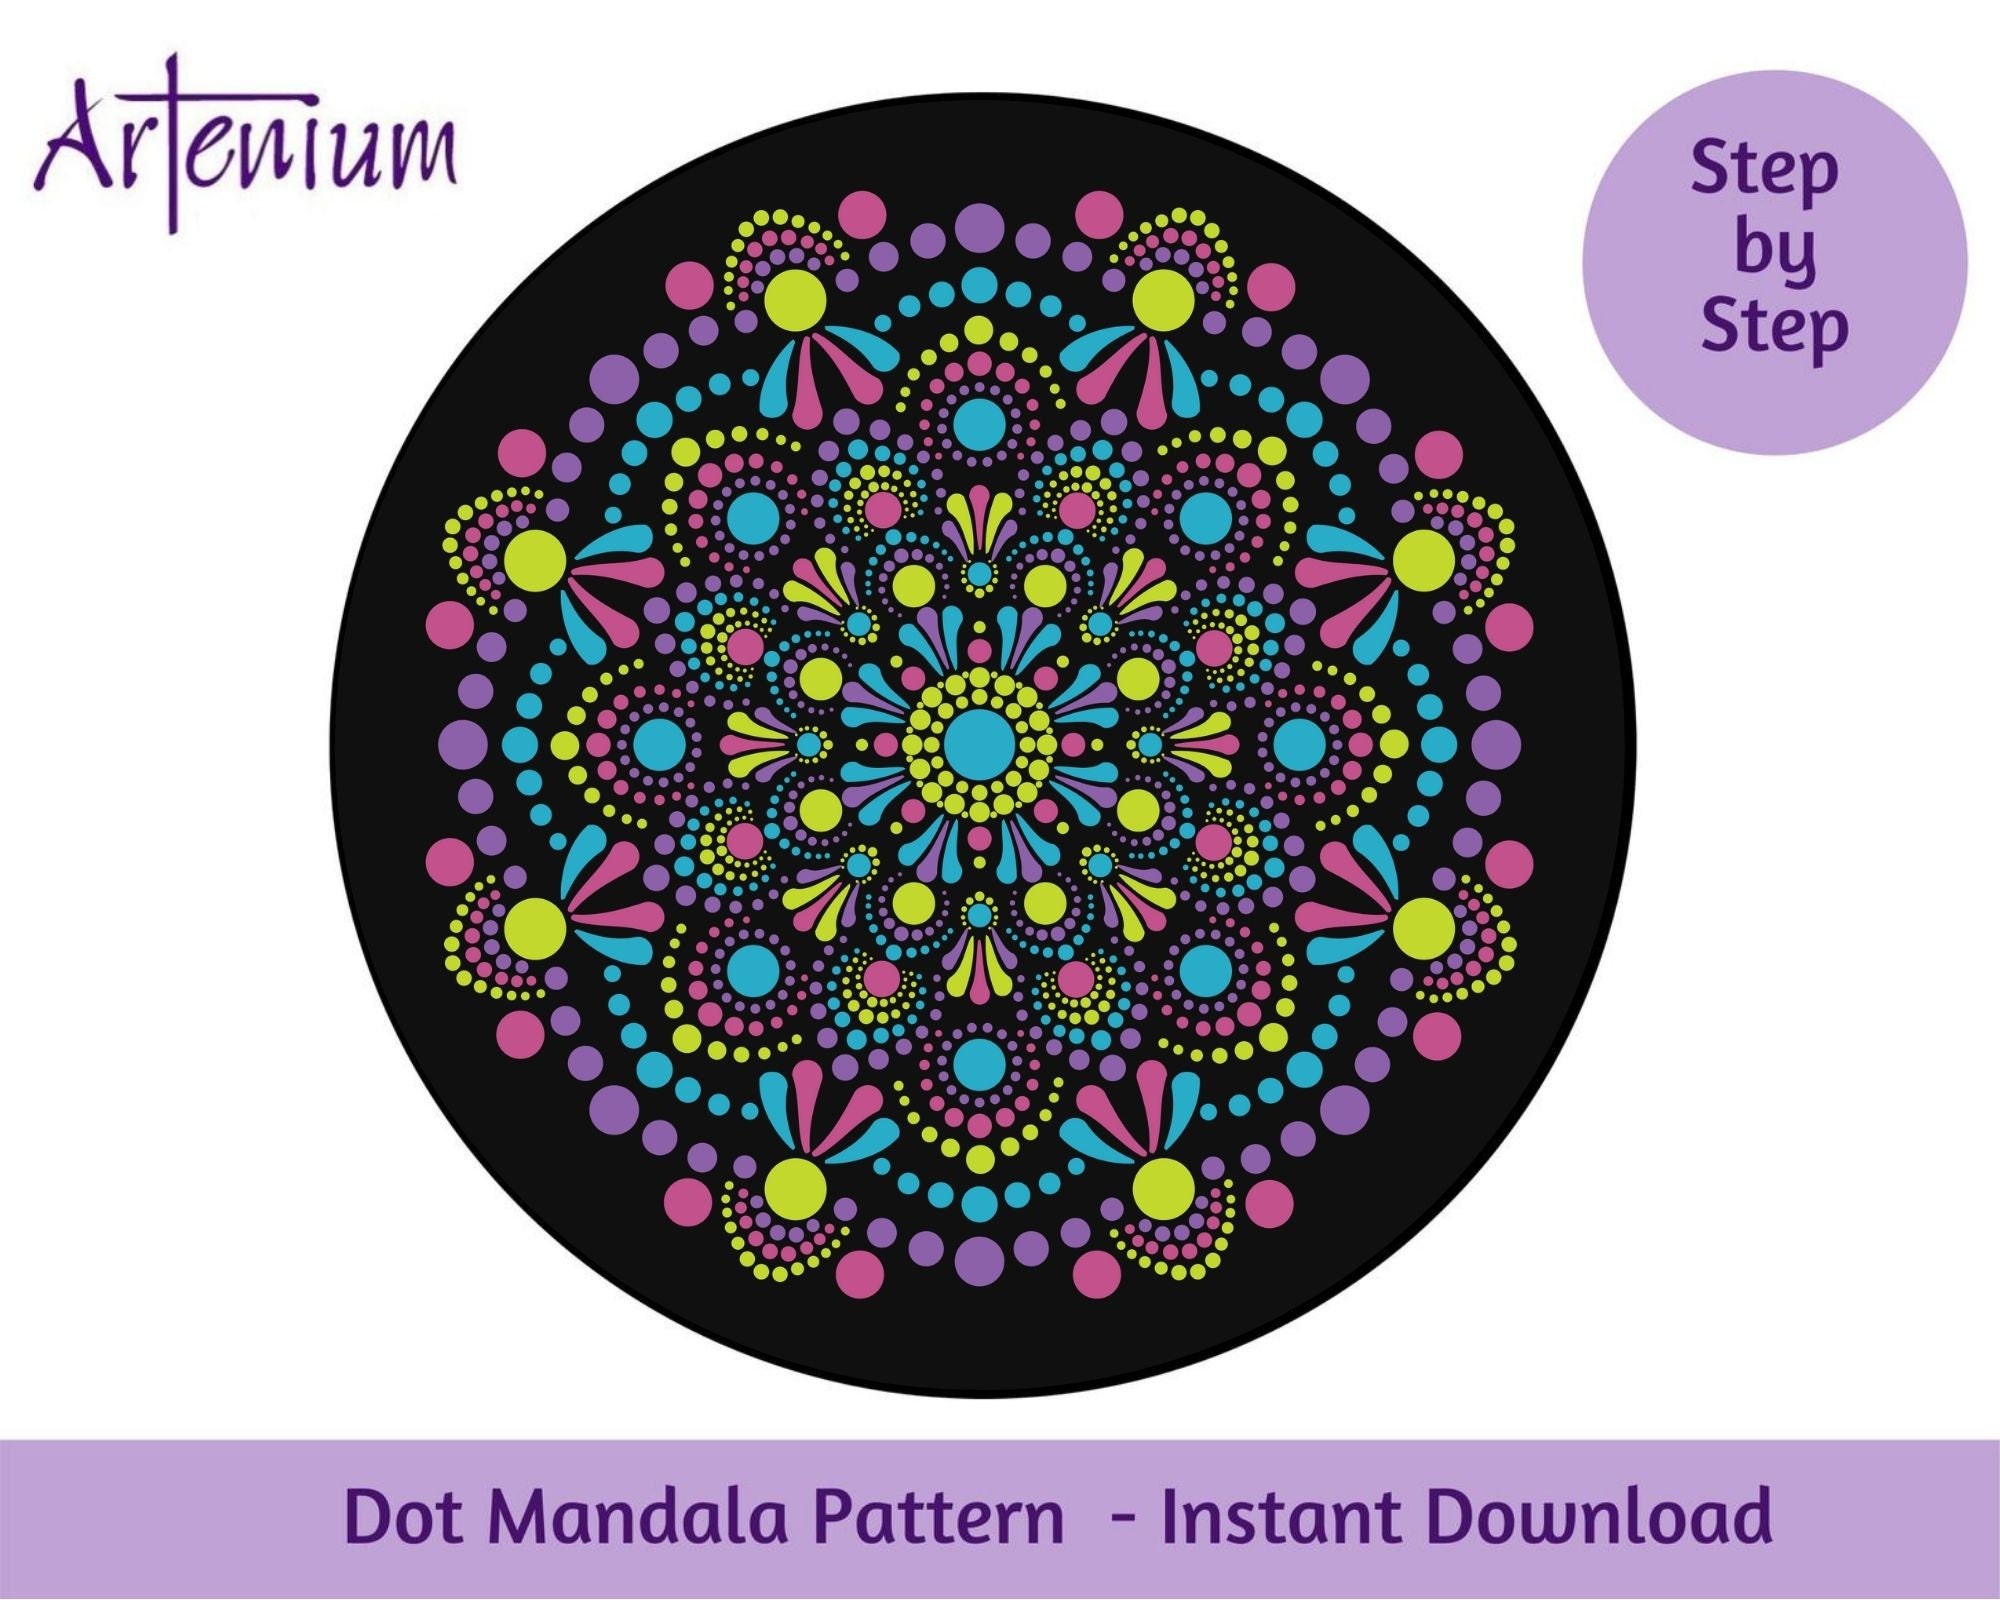 6 Tips for Improving Dotting Mandalas - Rock Painting 101